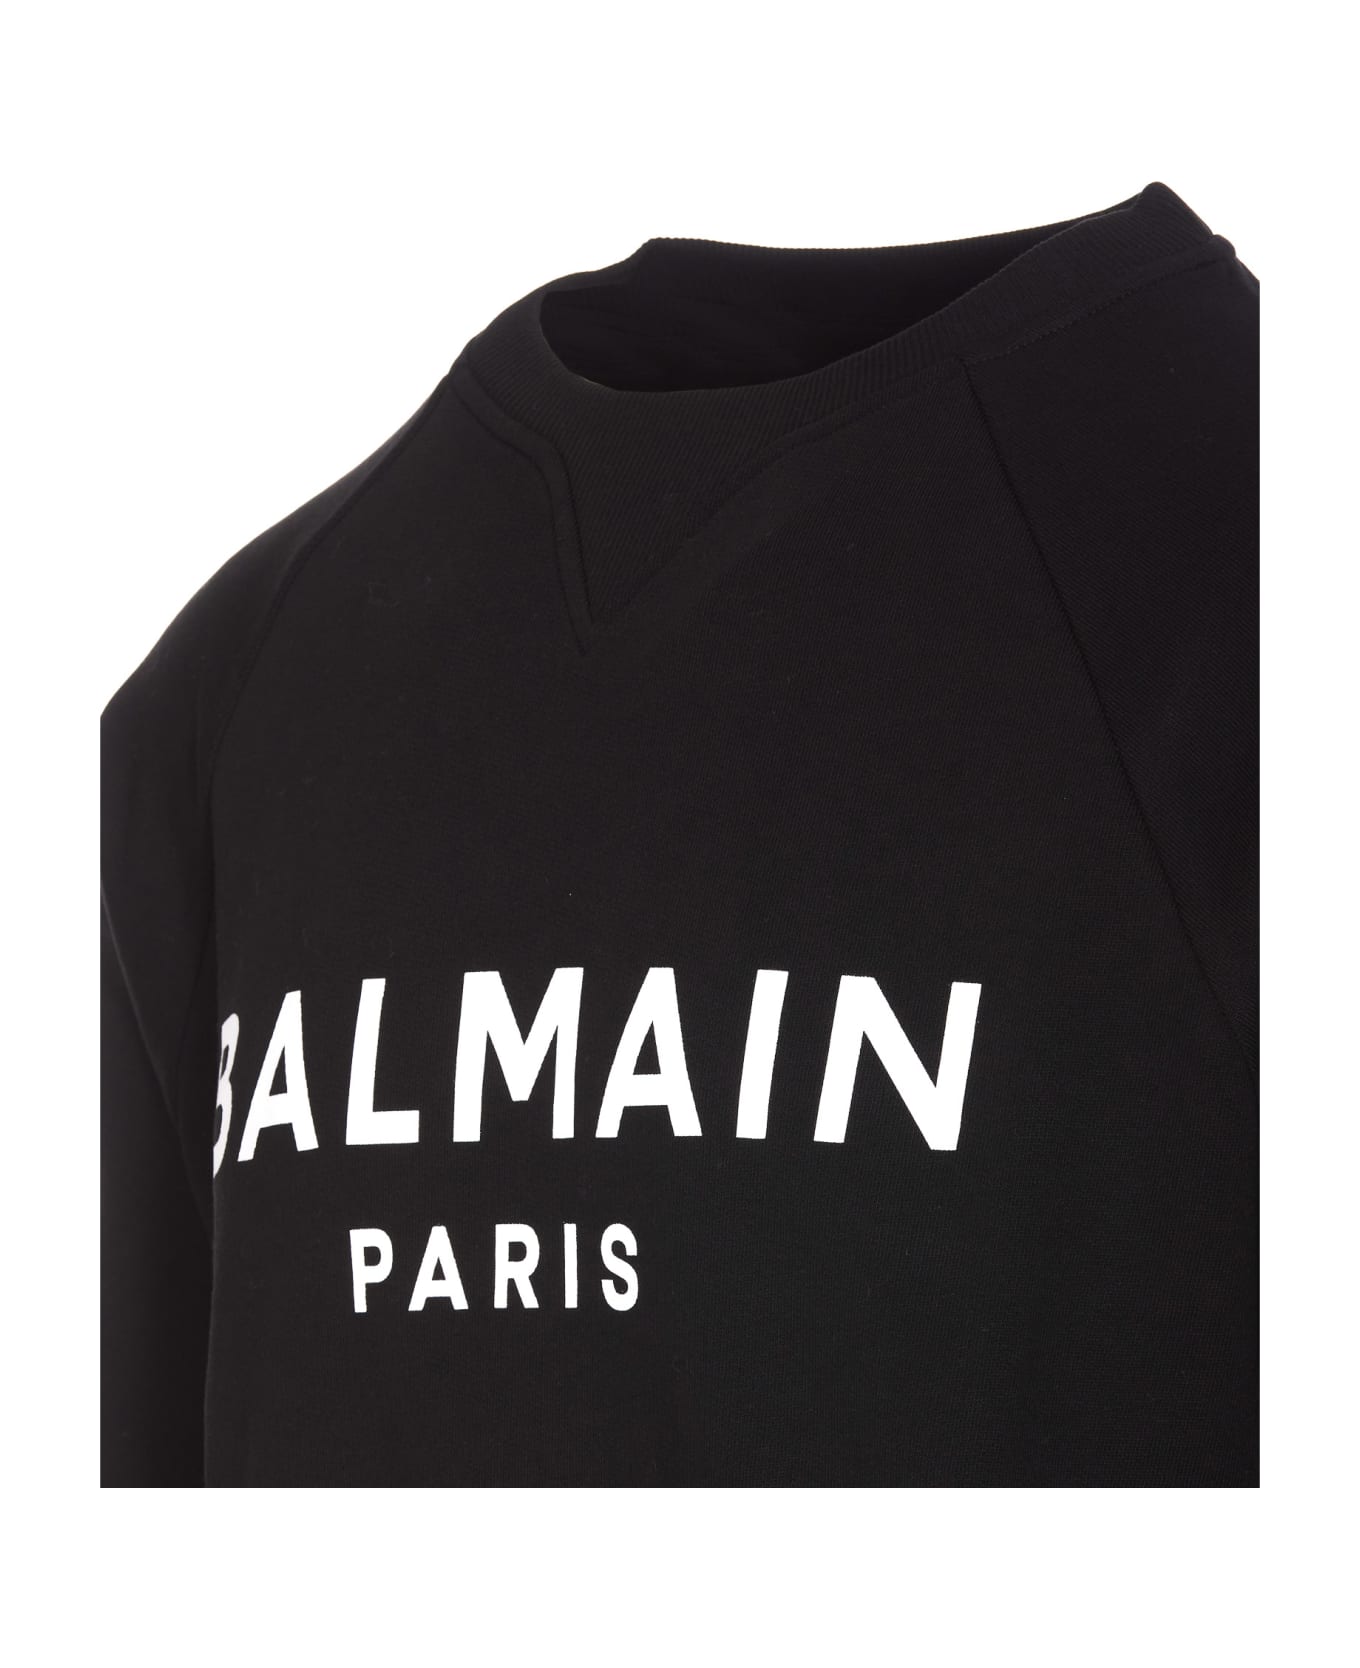 Balmain Logo Crewneck Sweatshirt - Black